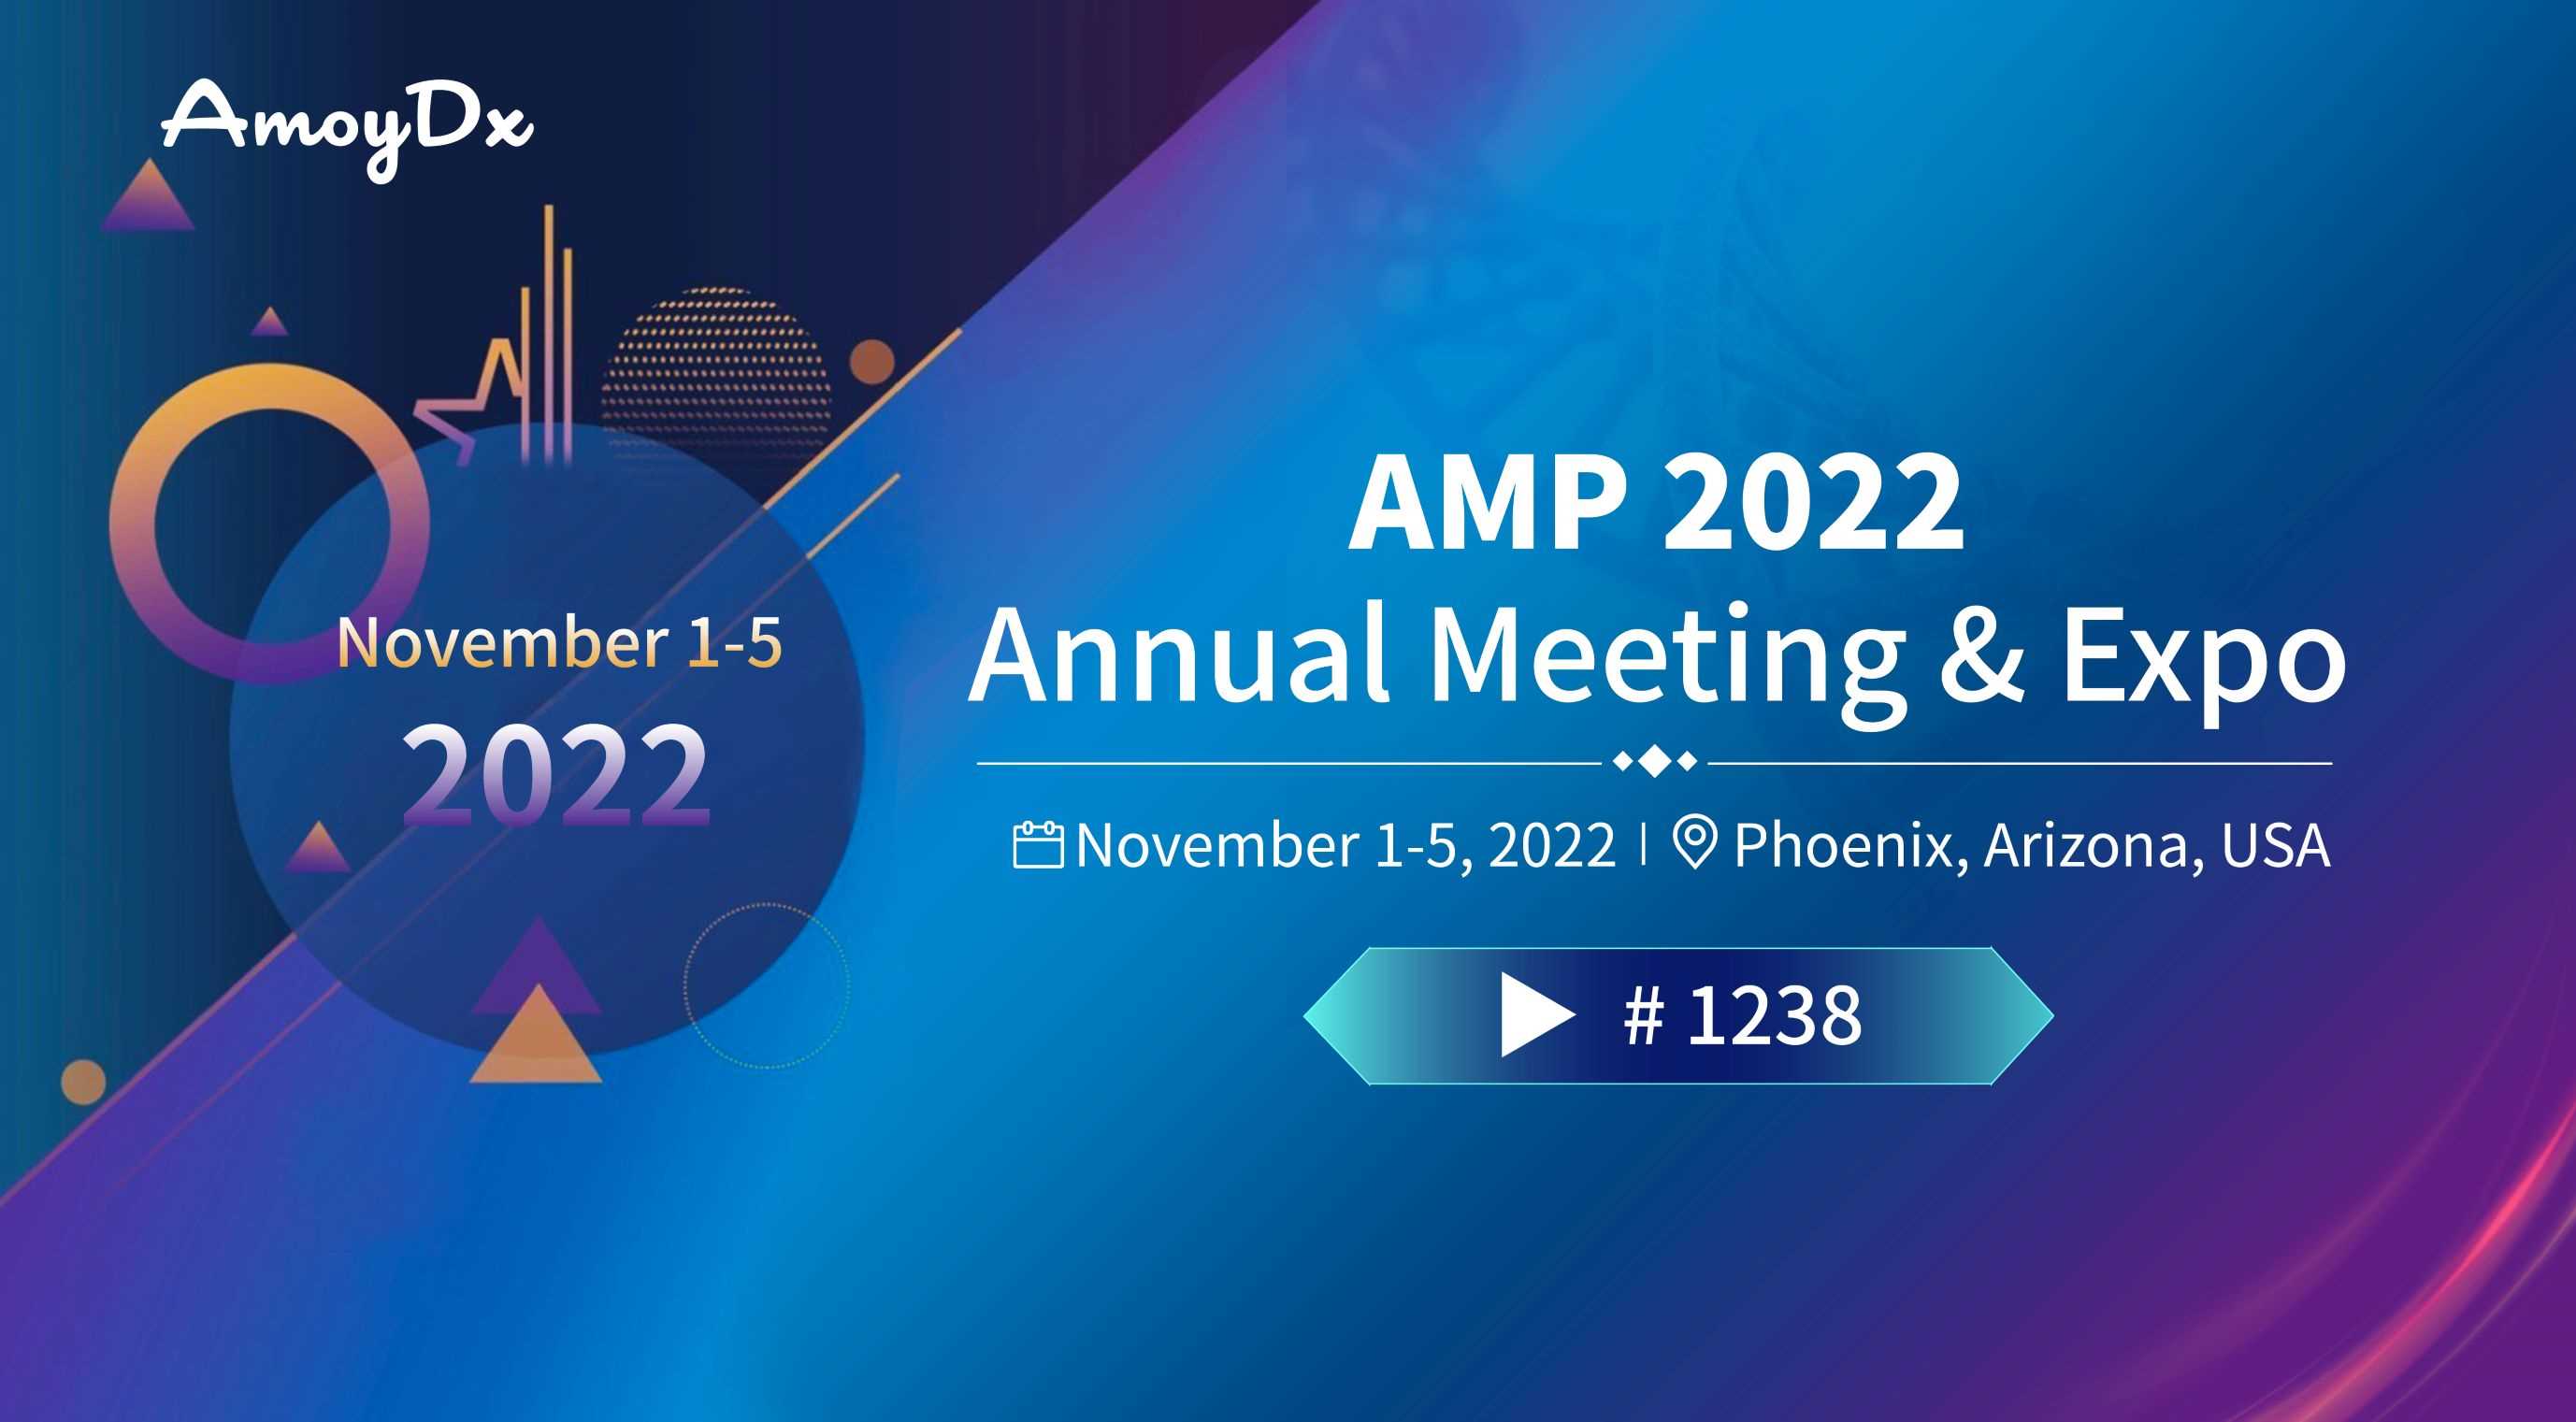 Visit AmoyDx at AMP 2022 in Phenix, Arizona